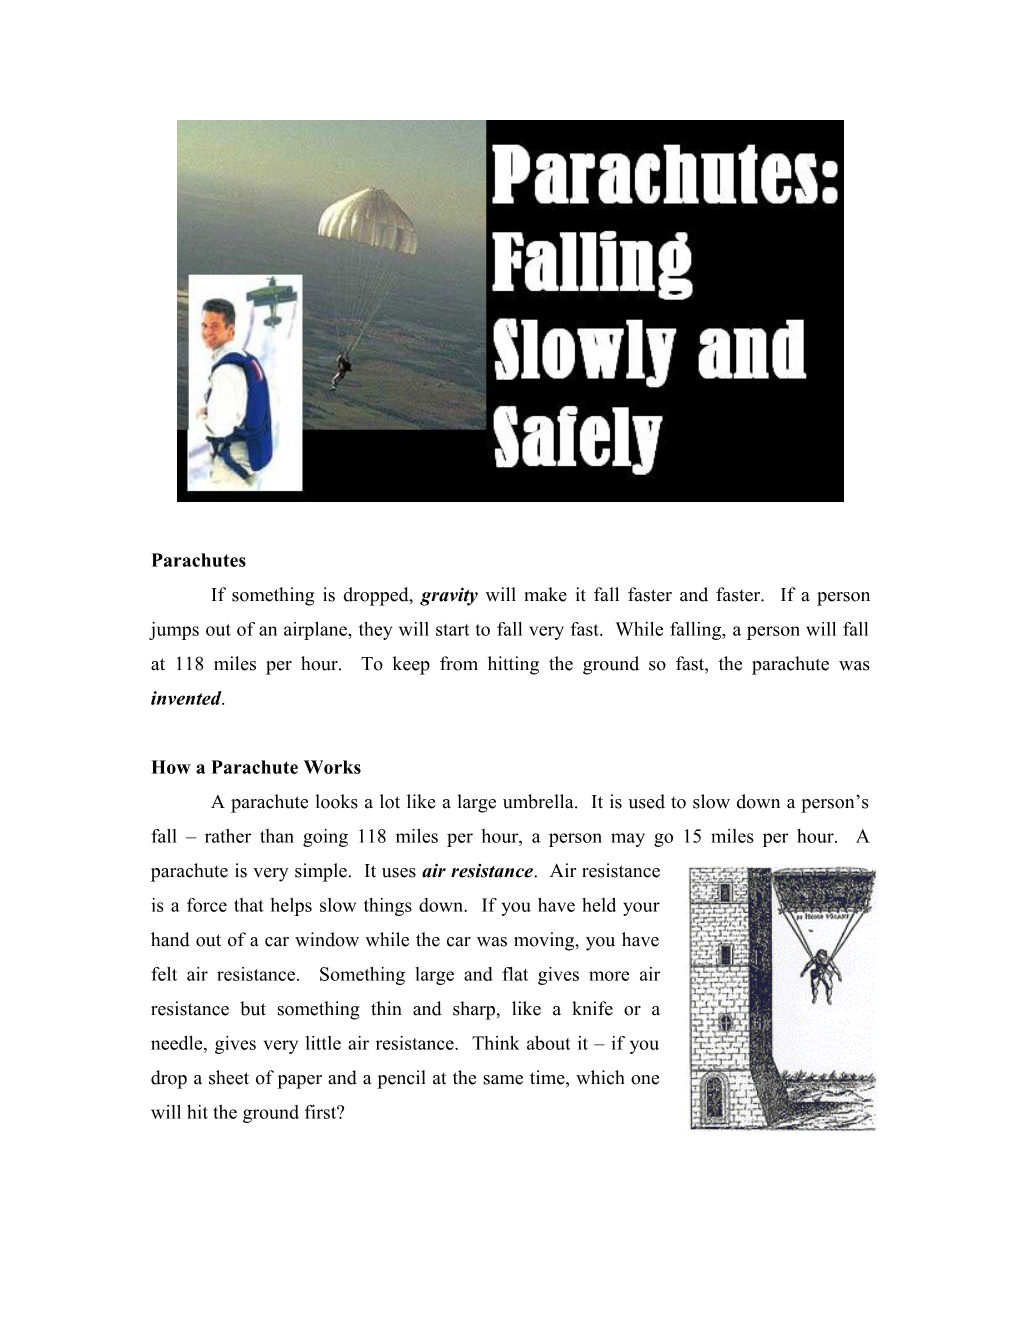 How a Parachute Works